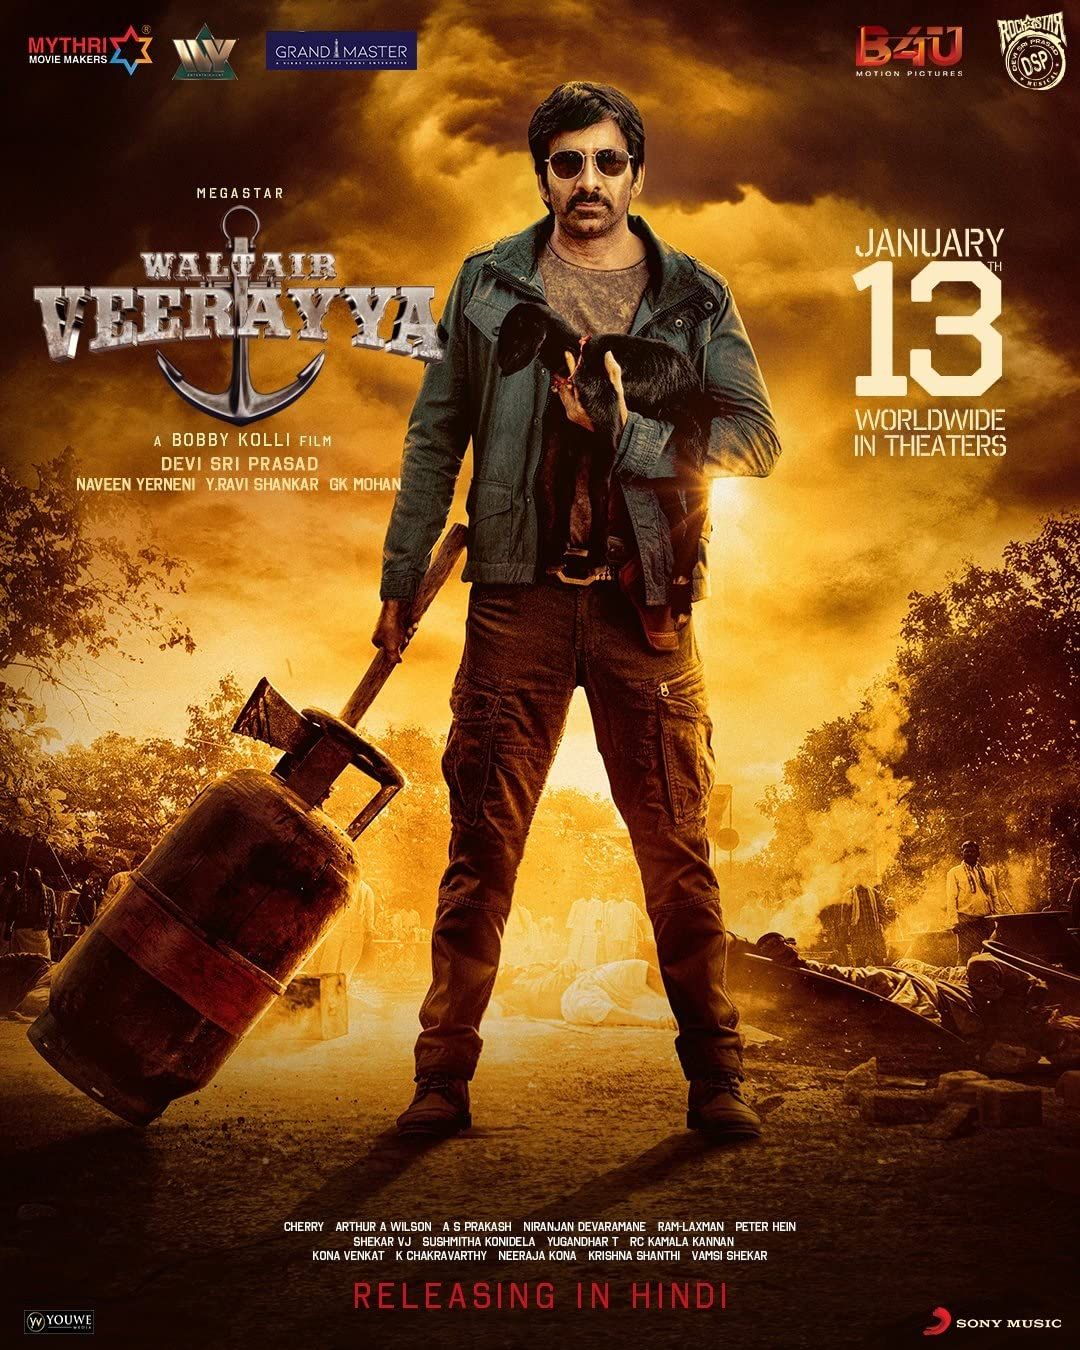 Waltair Veerayya 2023 Hindi (Clean) Dubbed HDRip download full movie